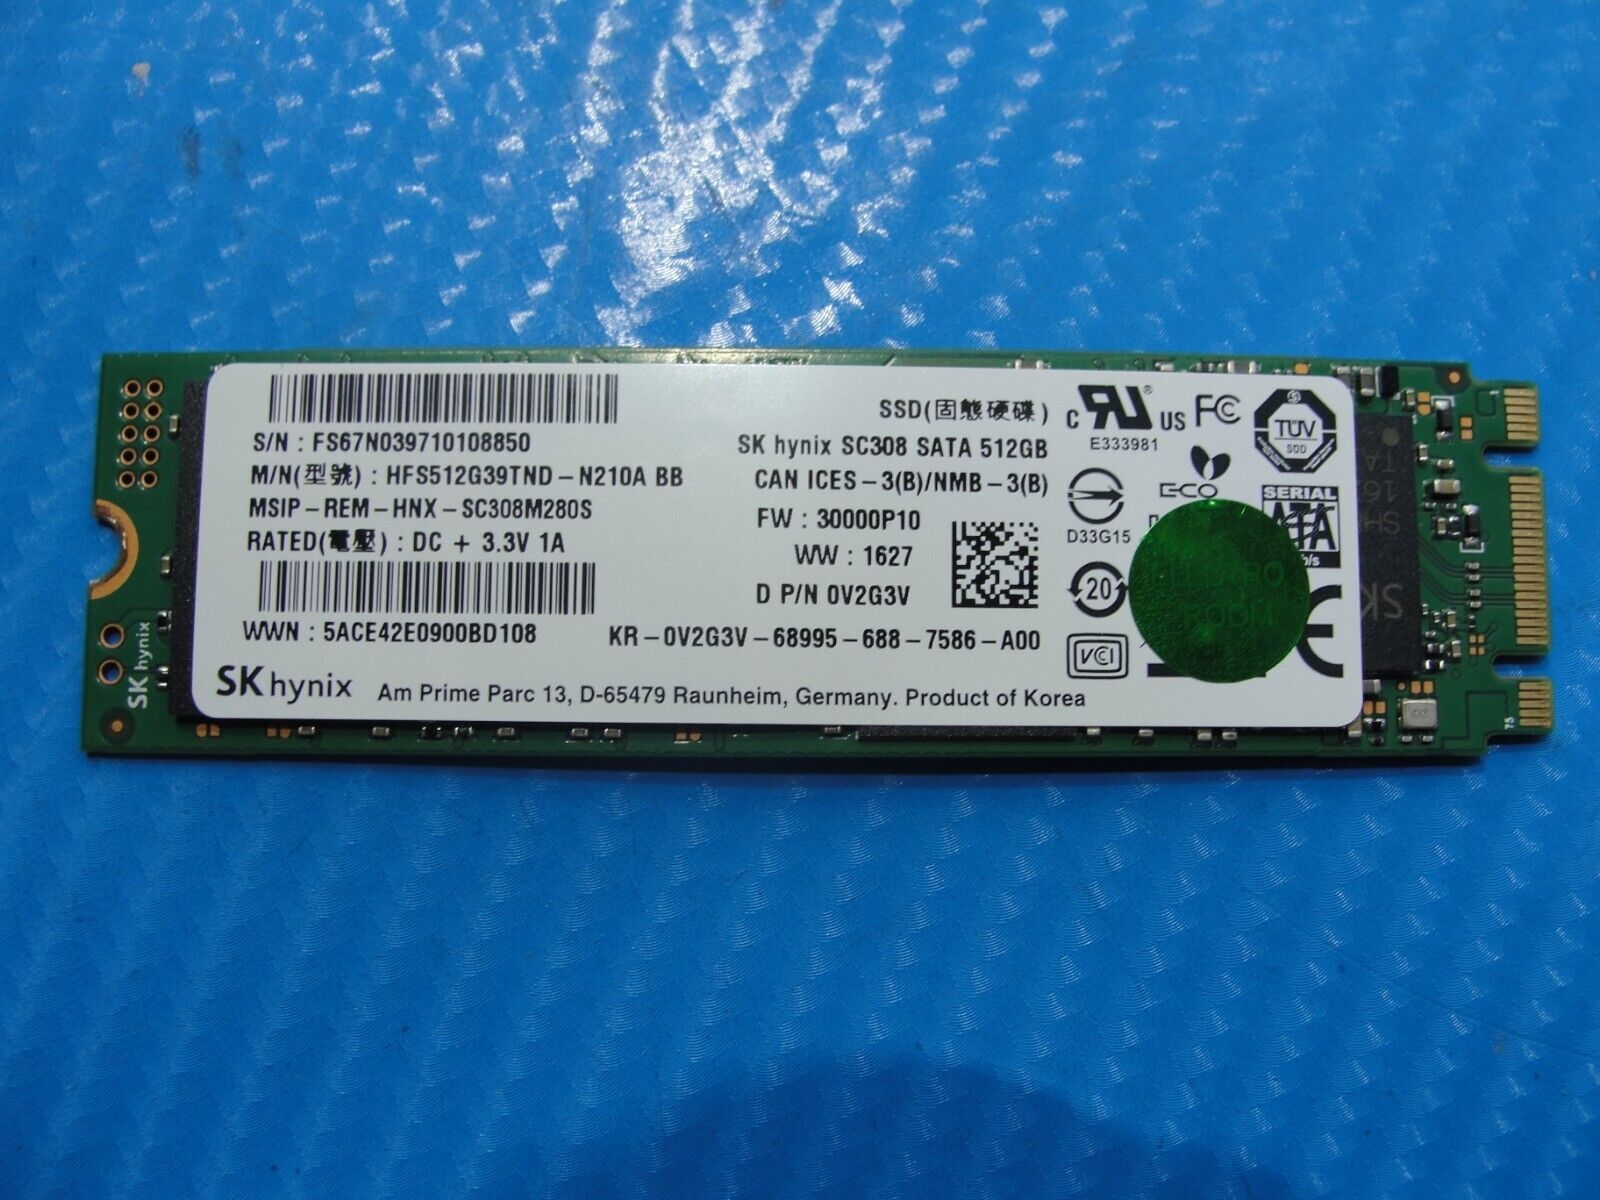 Dell 7579 SK Hynix 512Gb Sata M.2 SSD Solid State Drive HFS512G39TND-N210A V2G3V